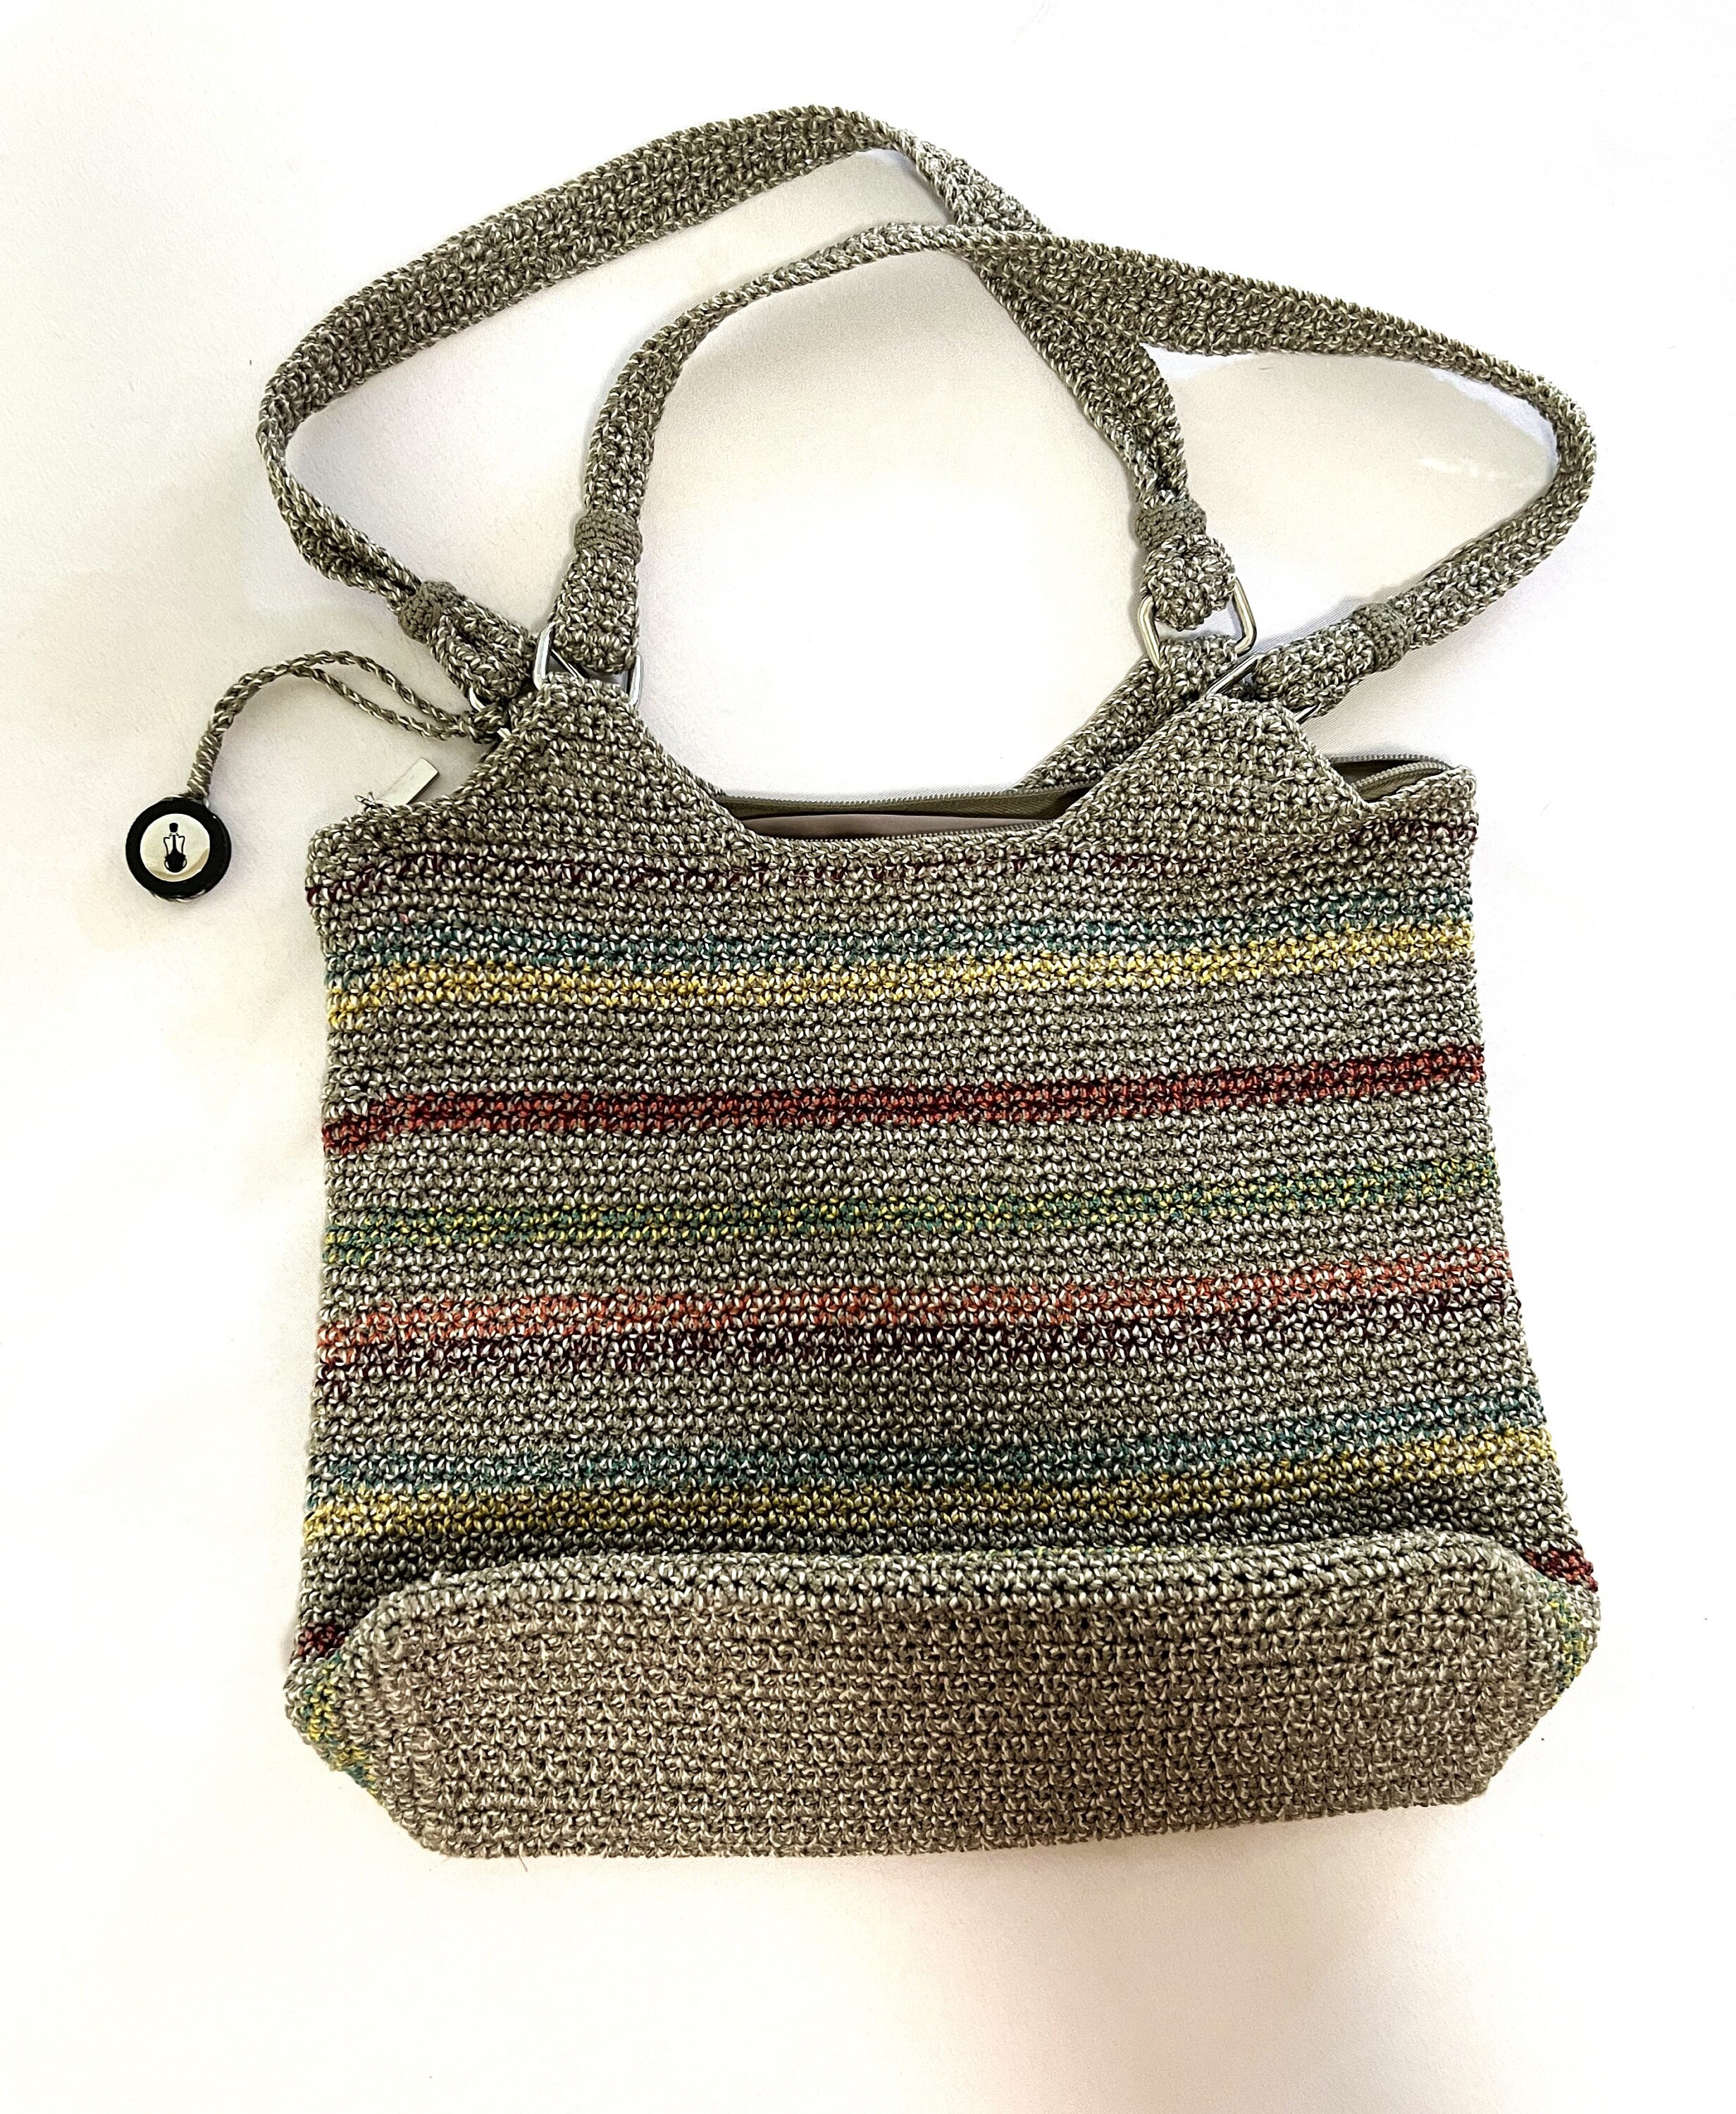 The Sak Crochet Purse Bag Braided Leather Handles Beige Grey